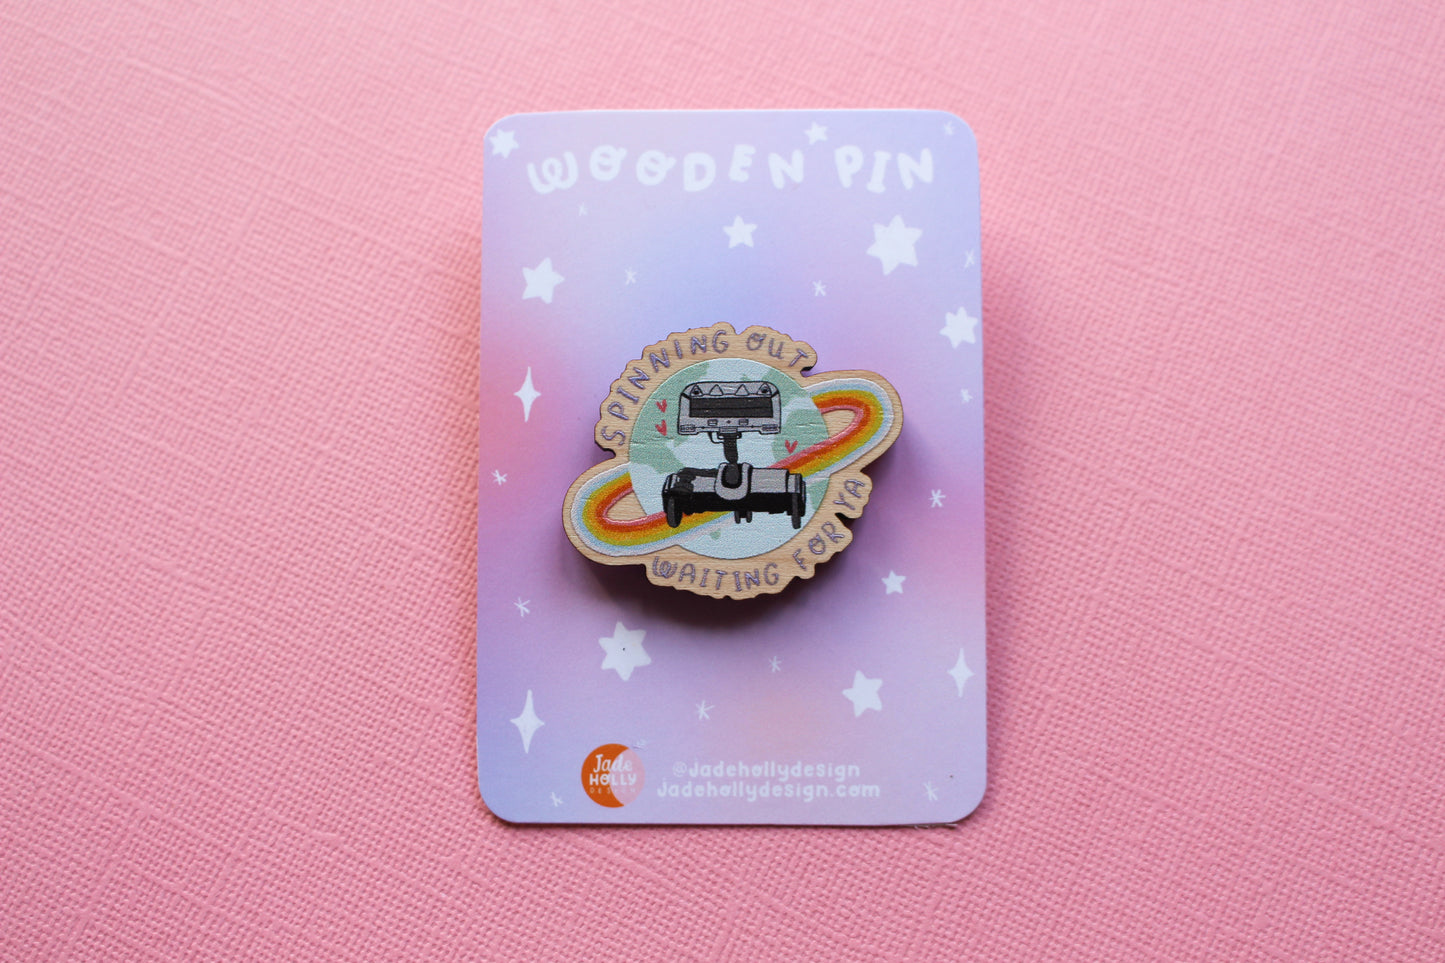 Wooden Stomper Pin Badge